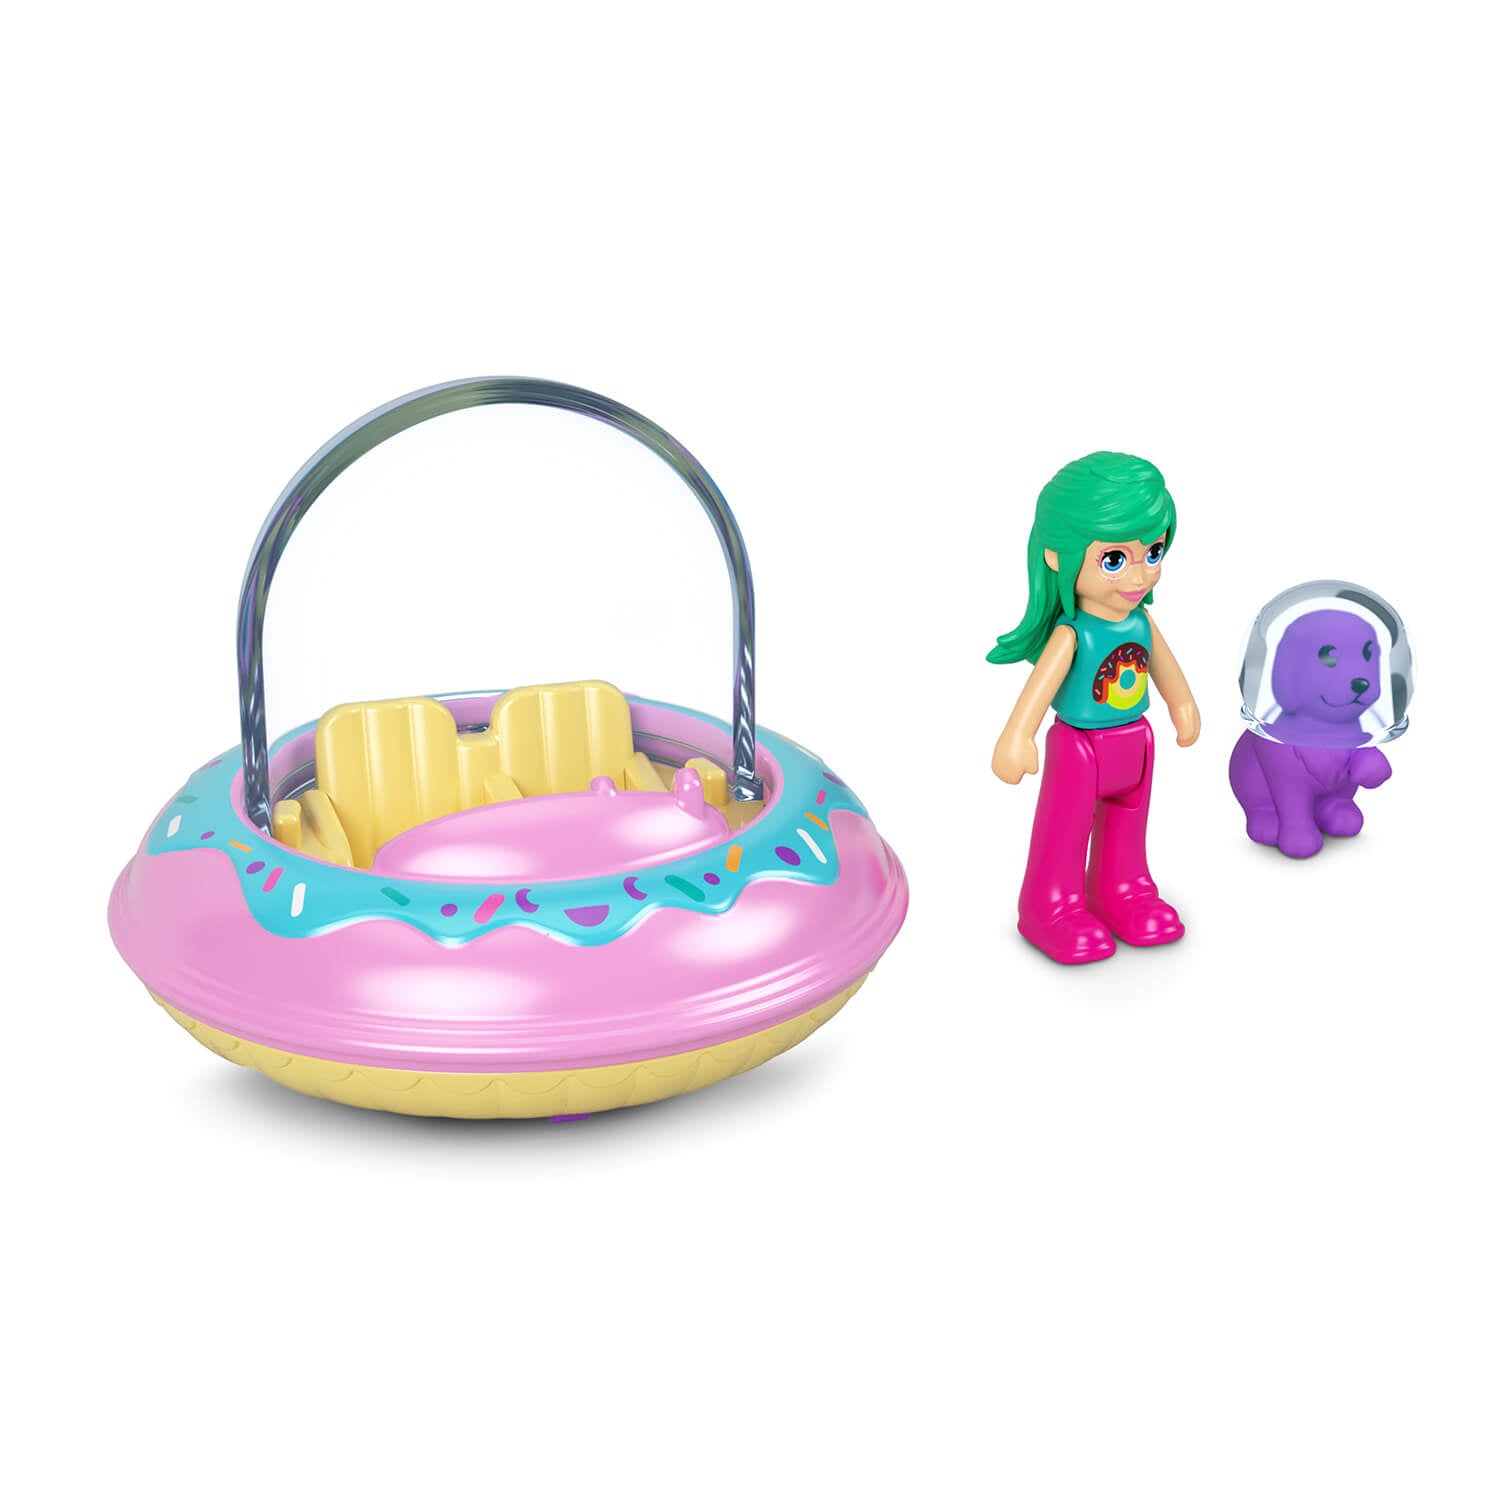 Polly Pocket Mini Donut UFO and Purple Puppy (with Space Helmet) Sidekick